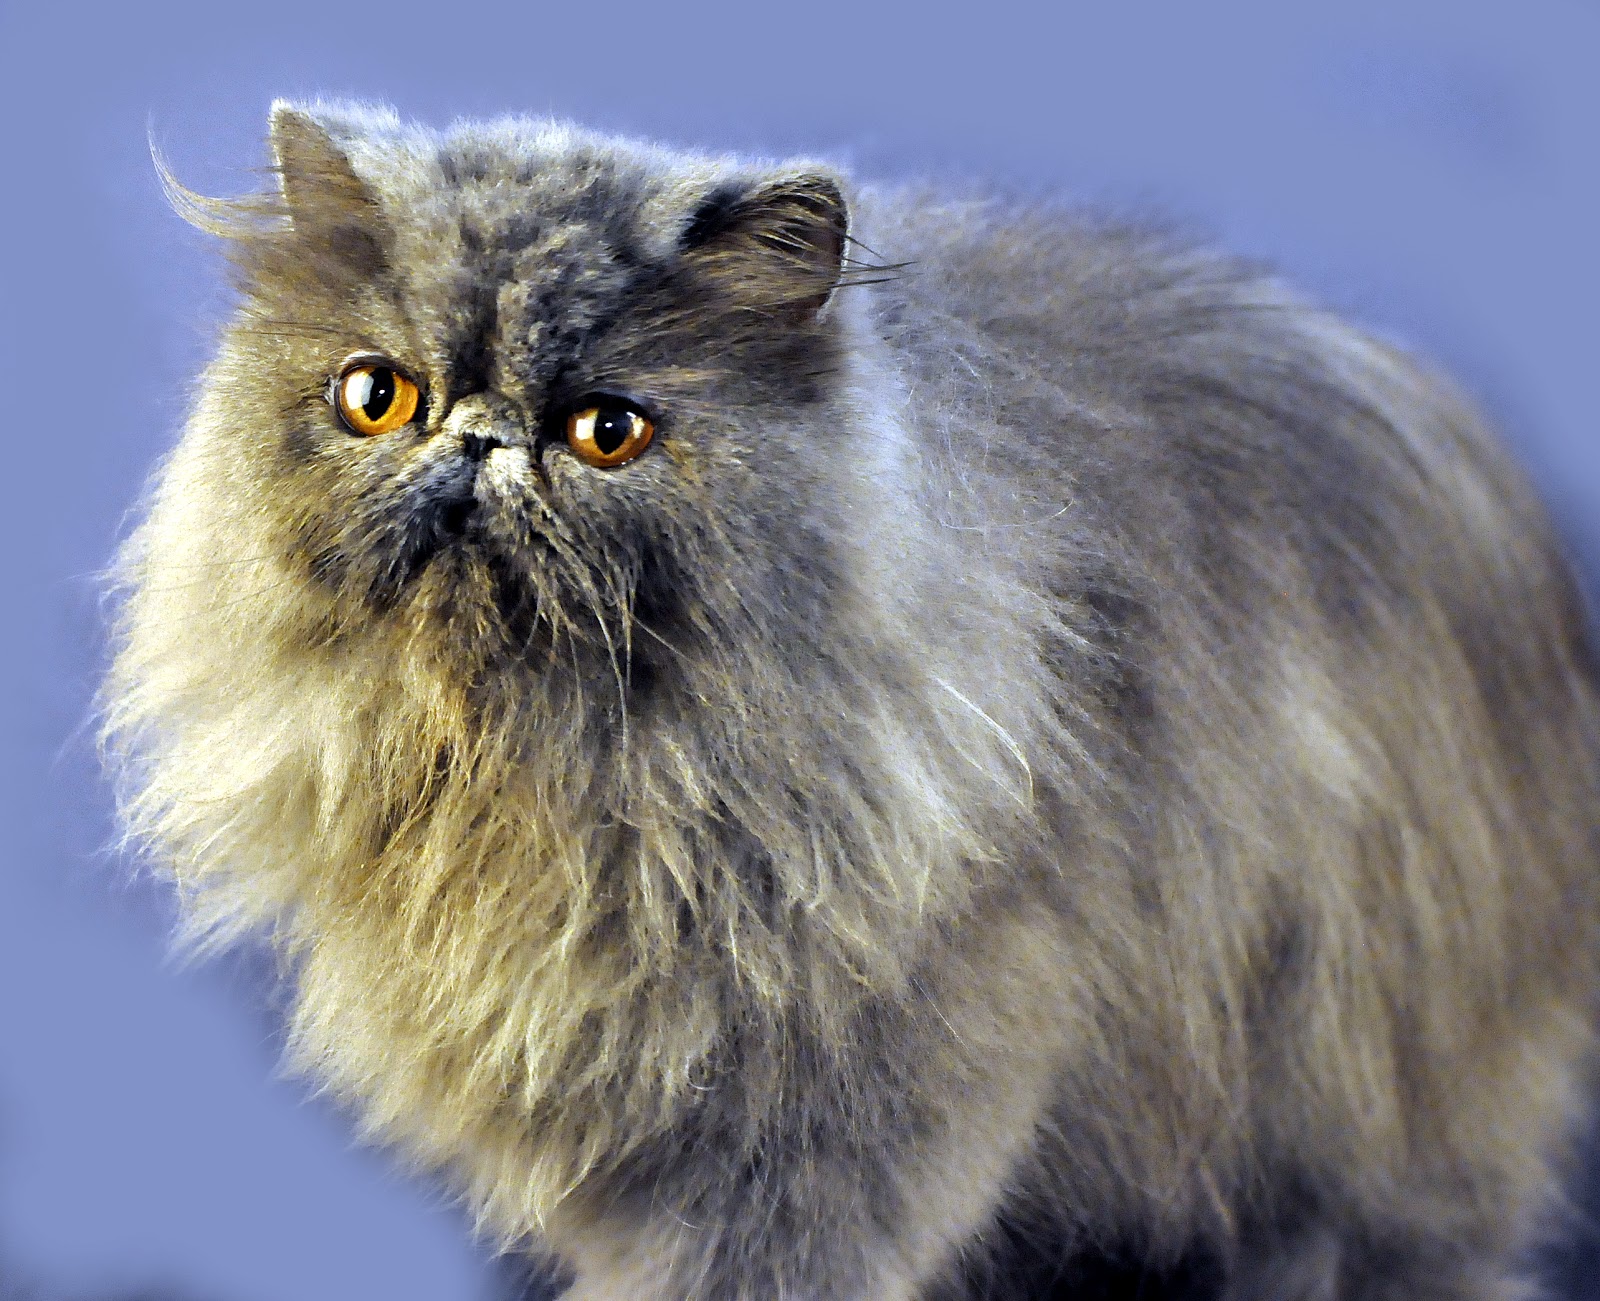 Aneka Kucing Ras Yang Paling Banyak Disukai Info Kucing Persia